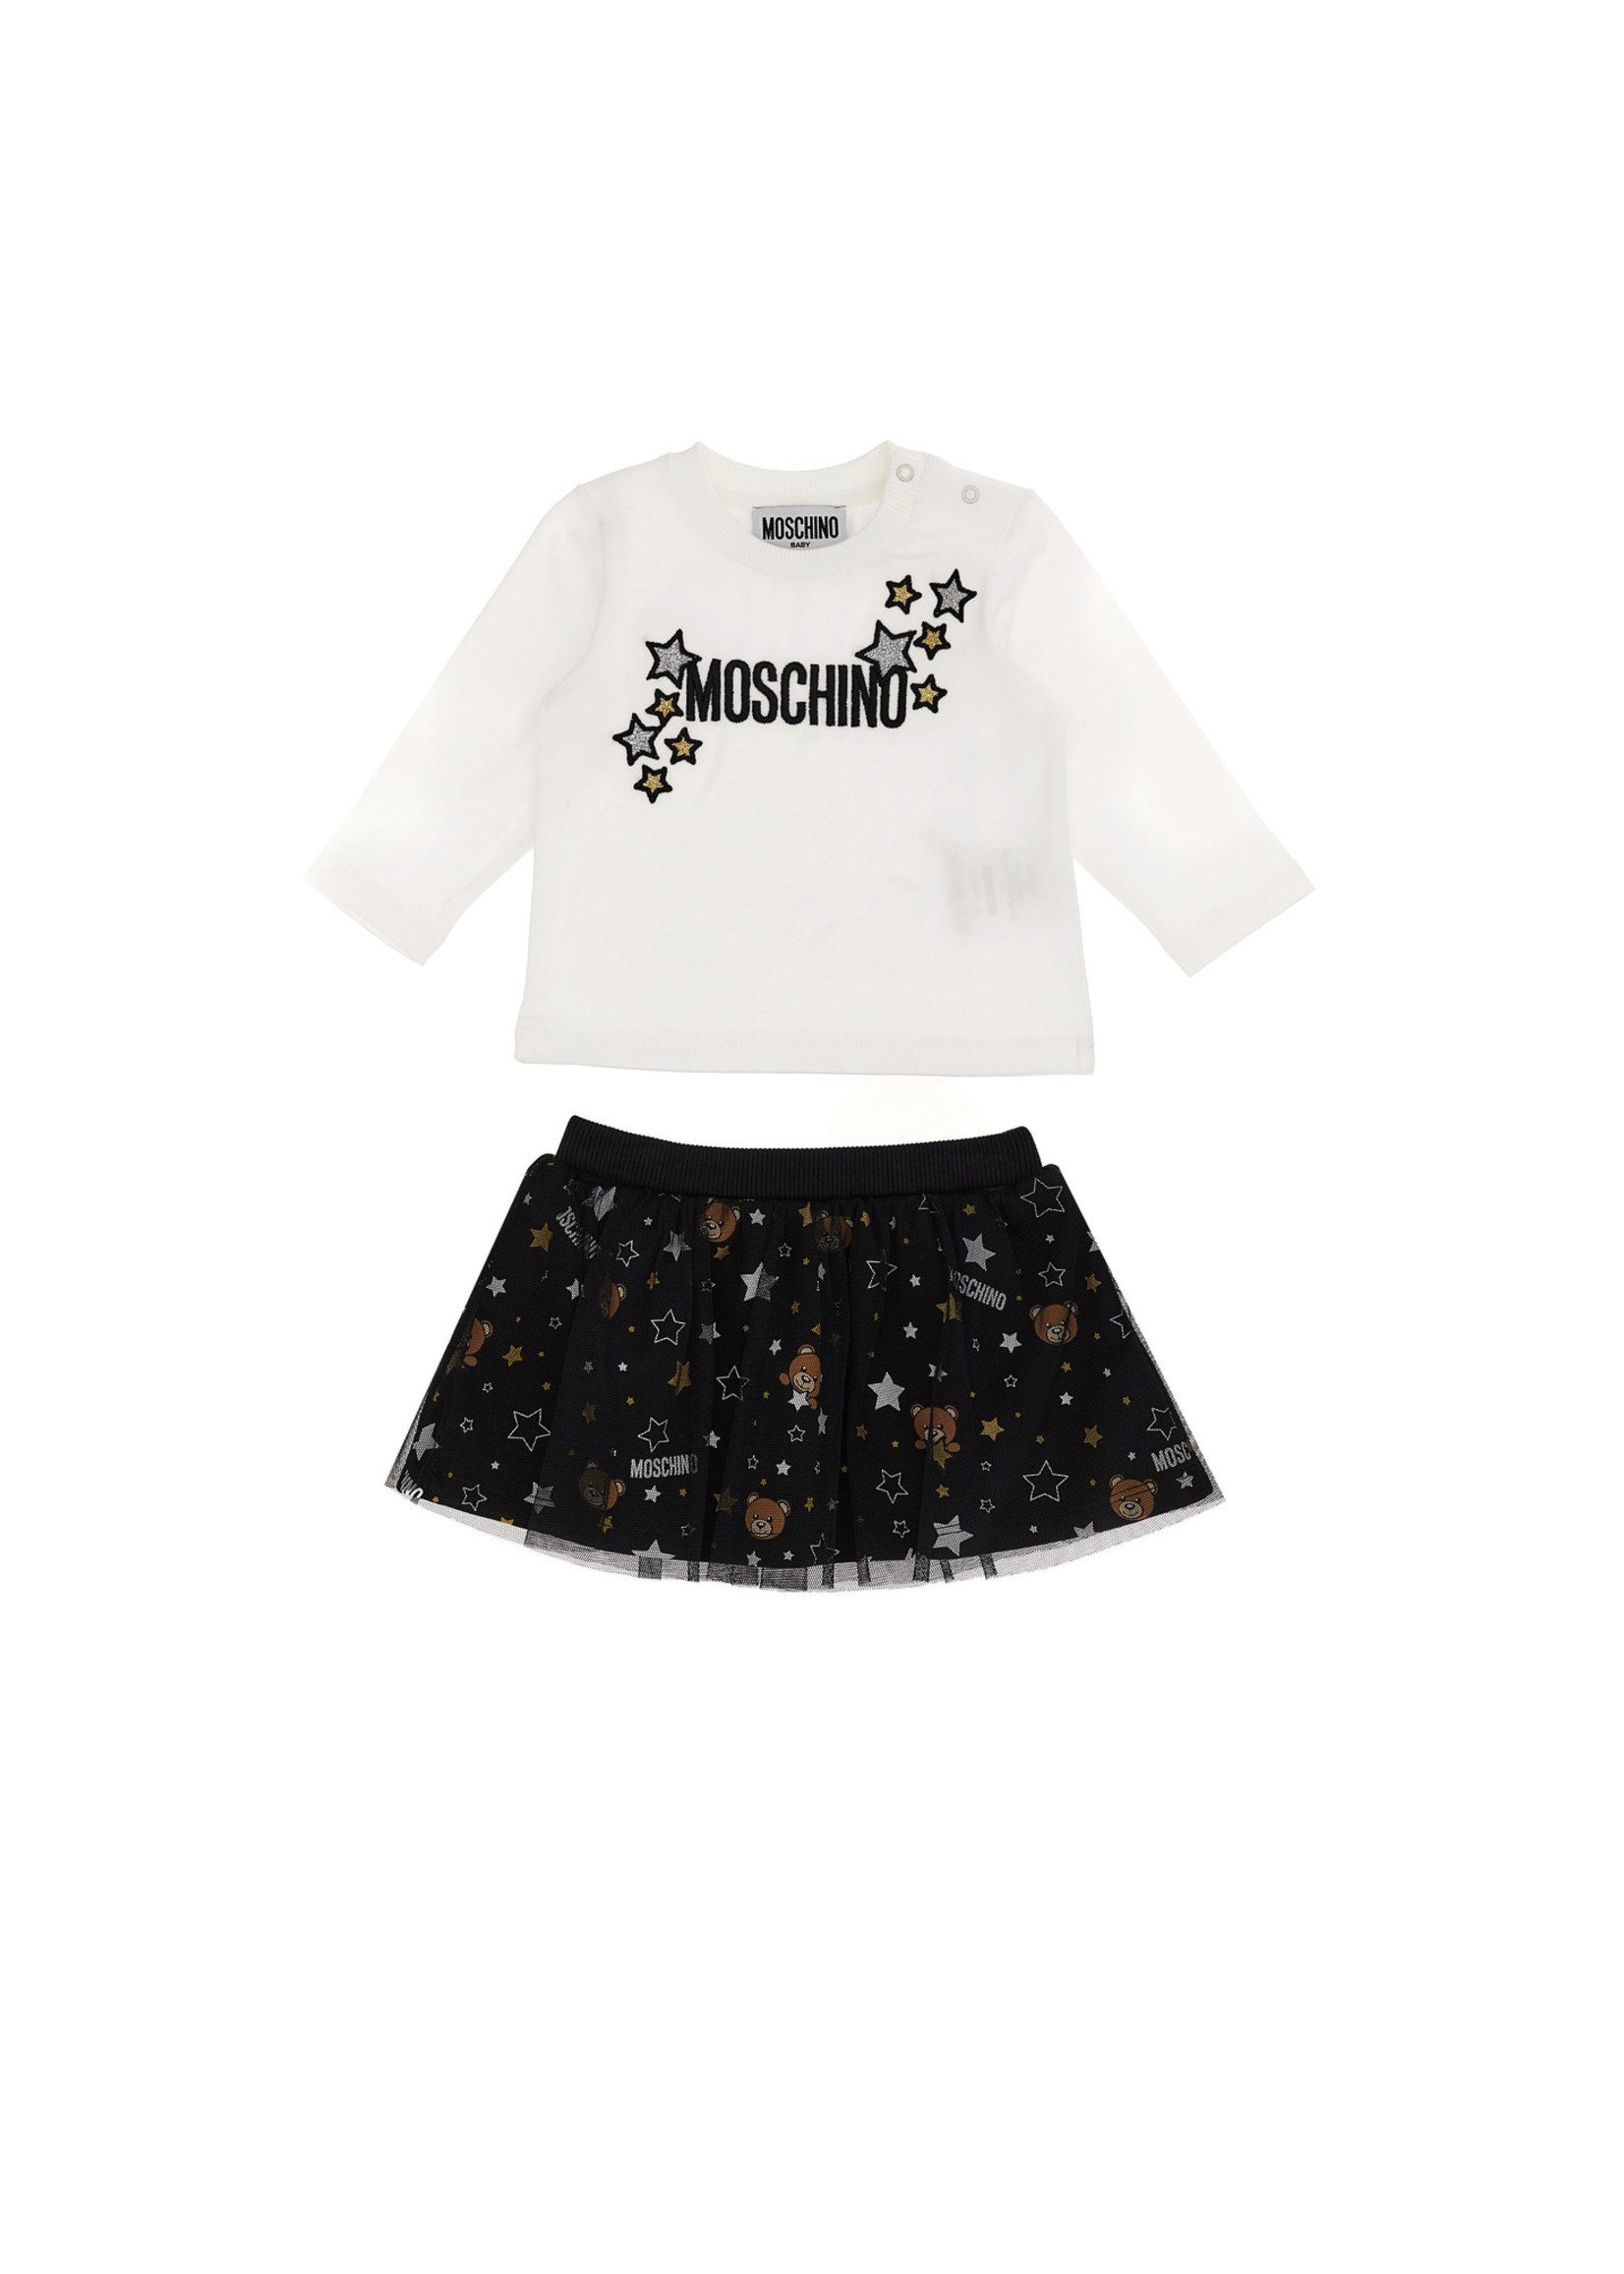 Moschino Moschino Baby Set with skirt black 'toy' - MDK01Z